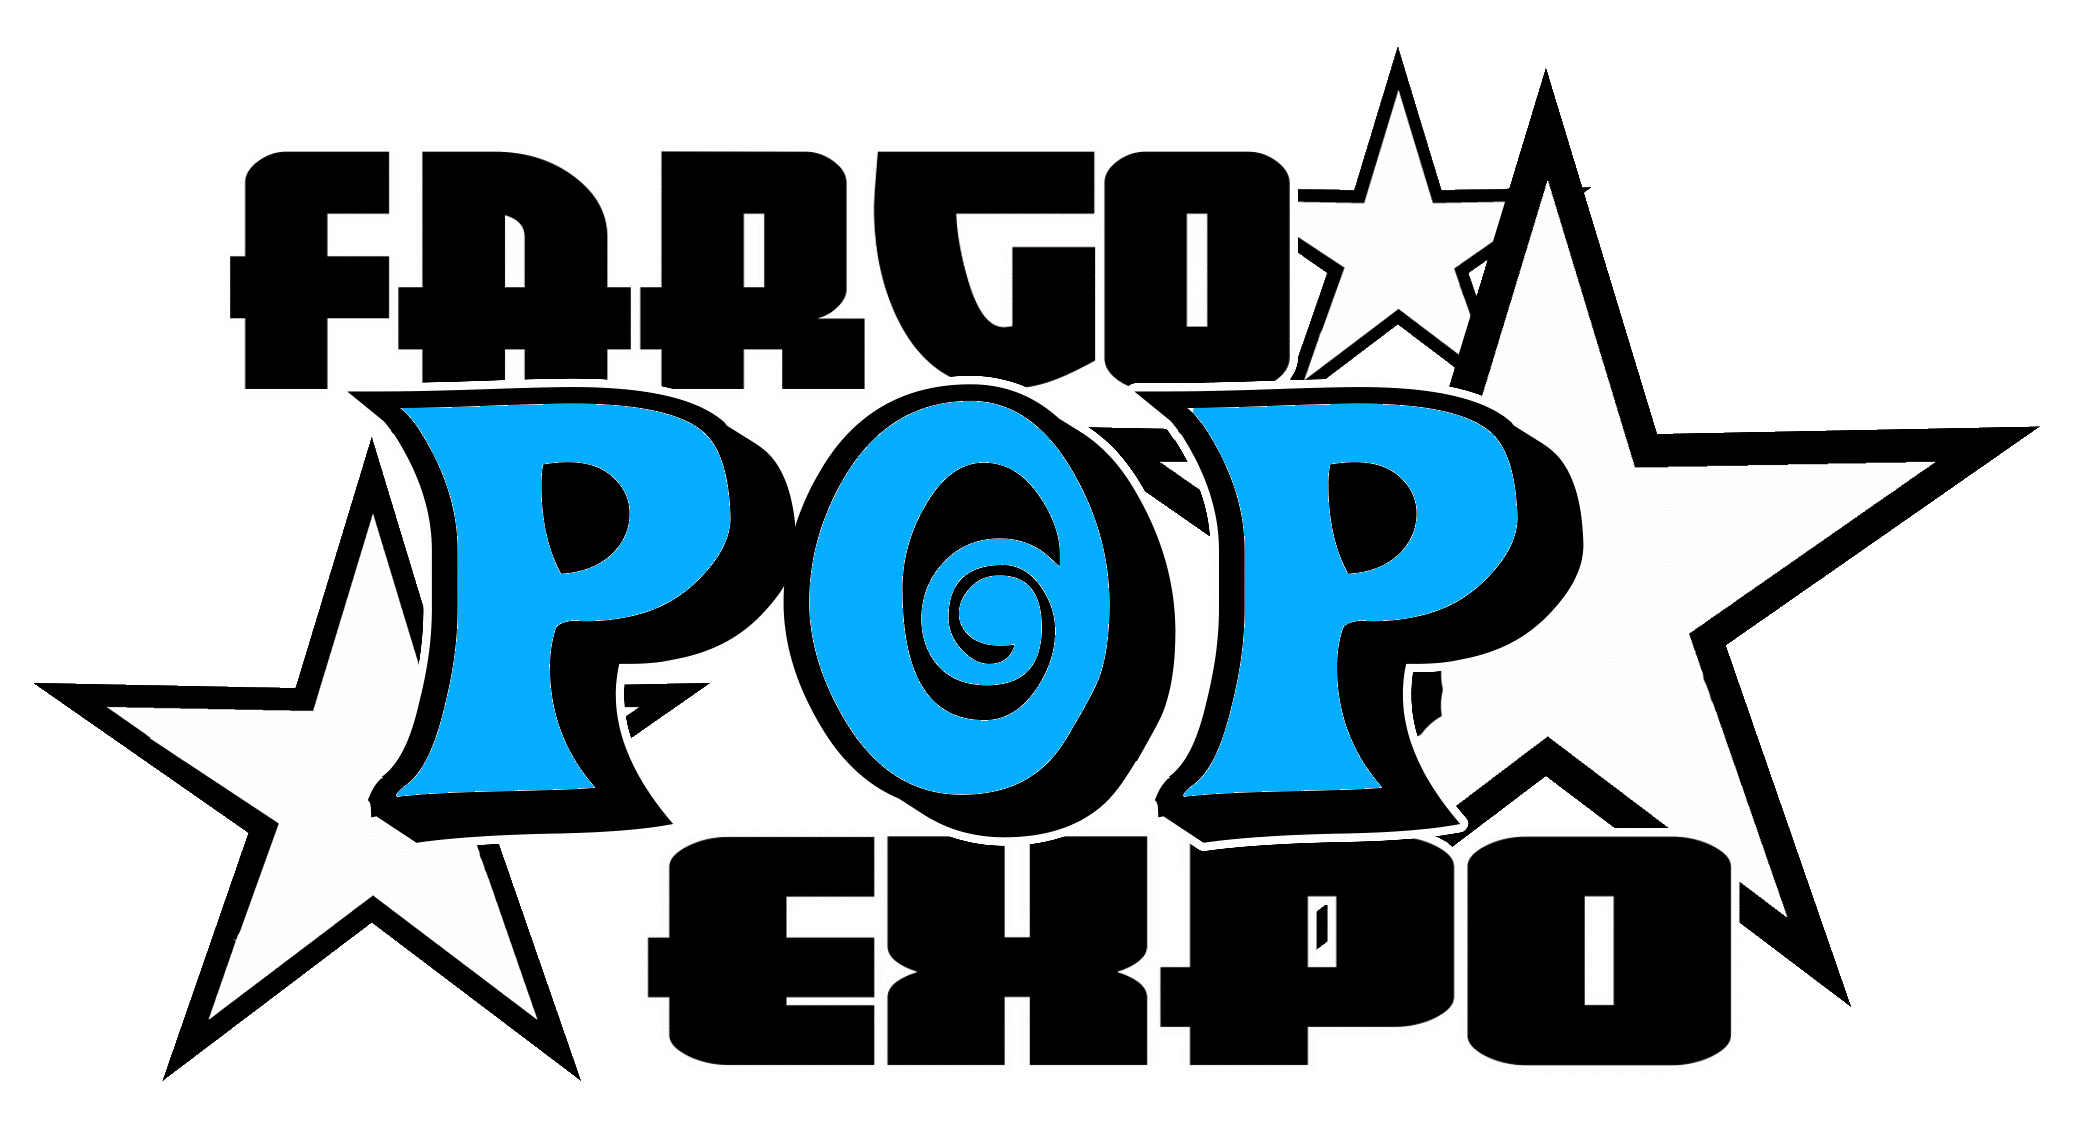 FargoPopExpo 2022 logo